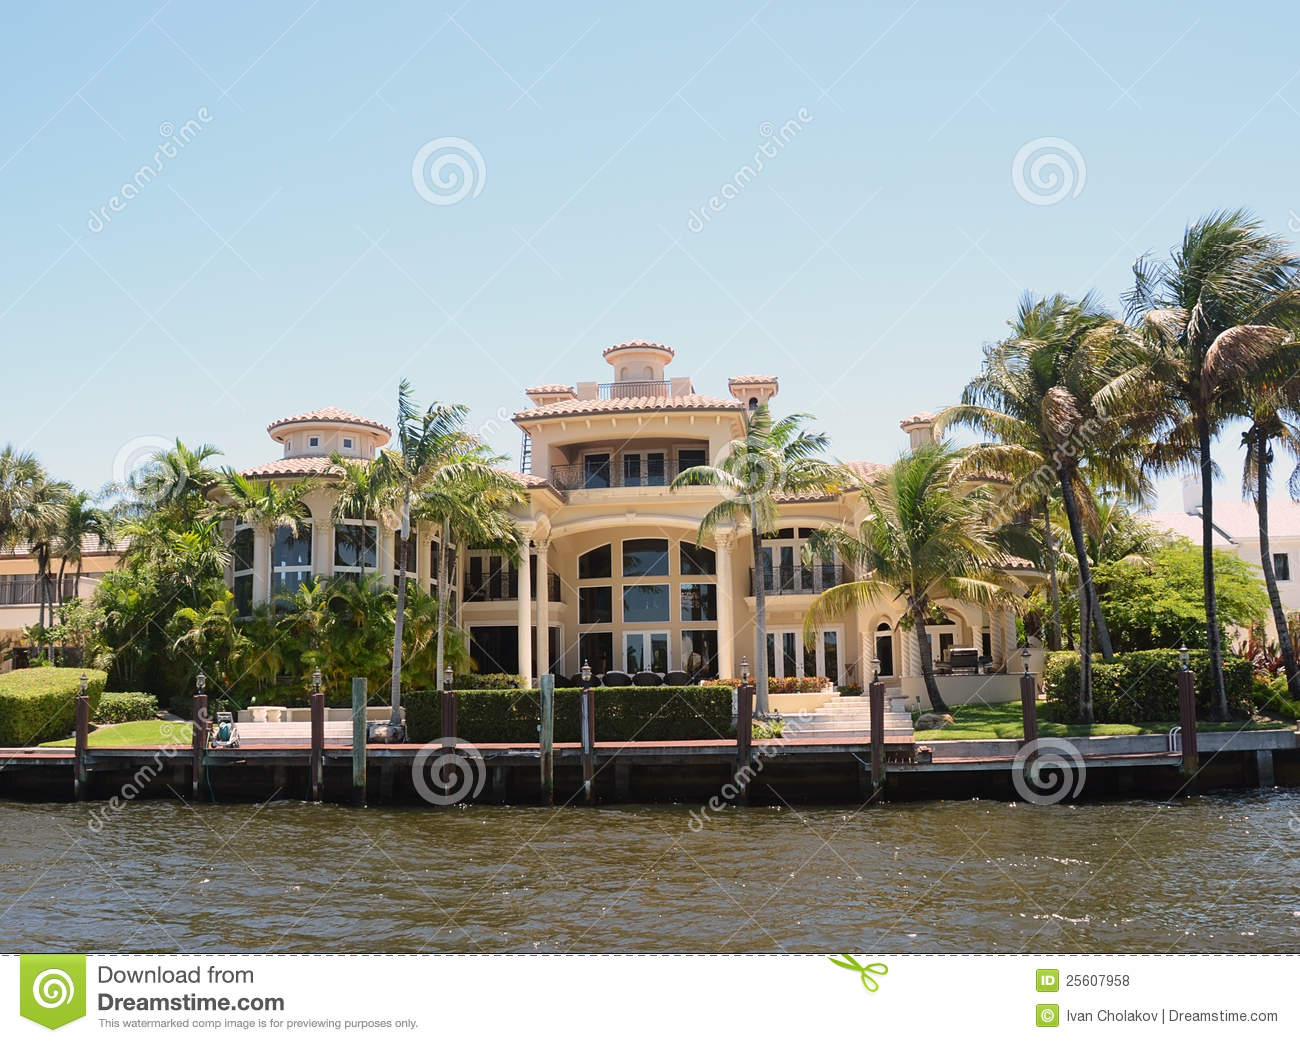 Luxury Waterfront Homes Stock-Photo Free